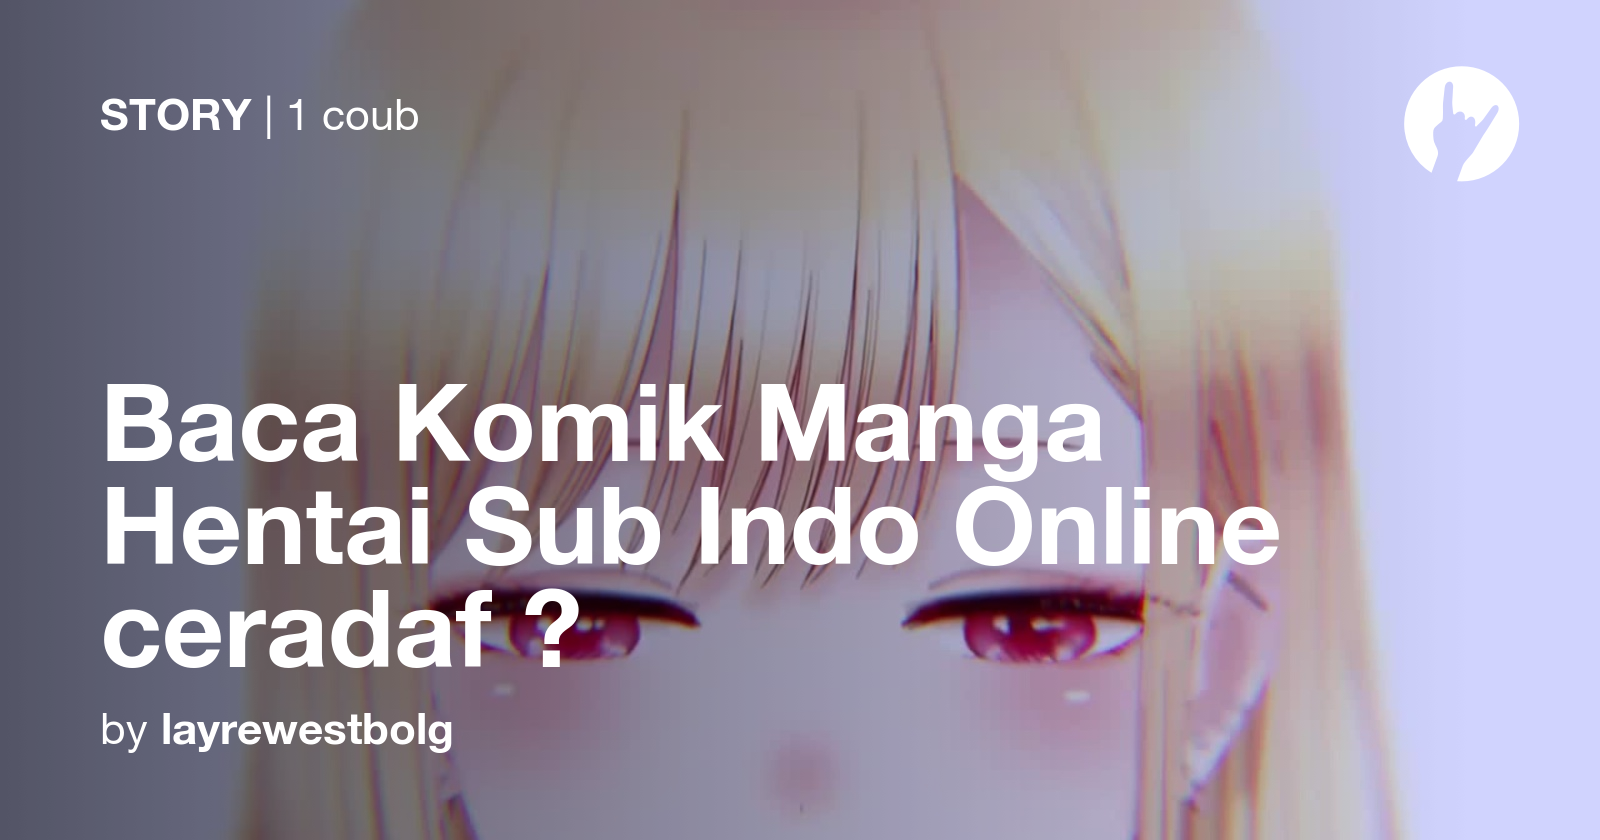 online hentai sub indon